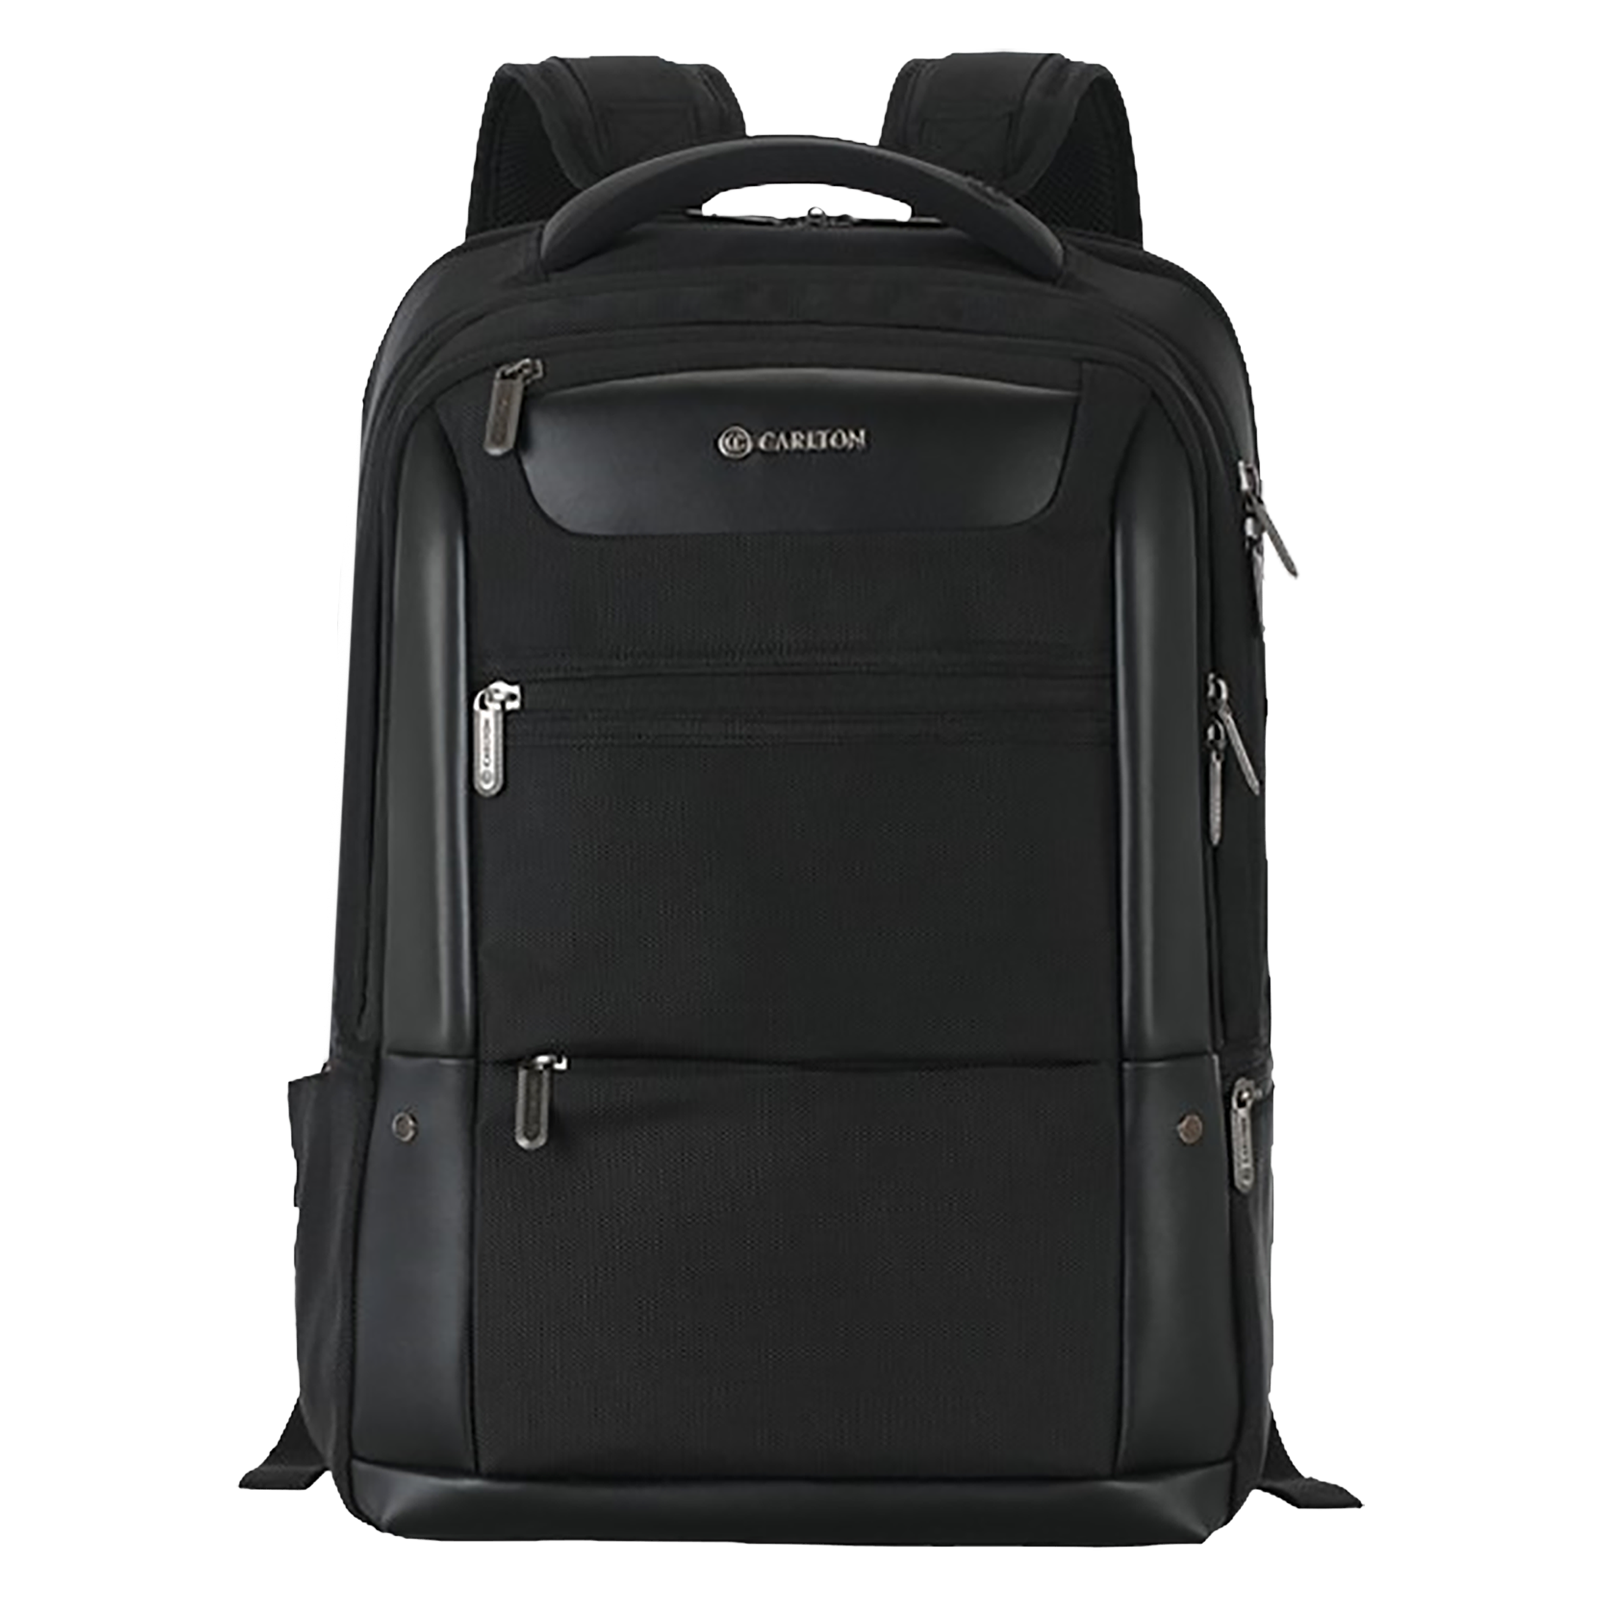 Carlton International Travel Bag Black & Brown Suit Luggage Bag w/ 3  Hangers | eBay